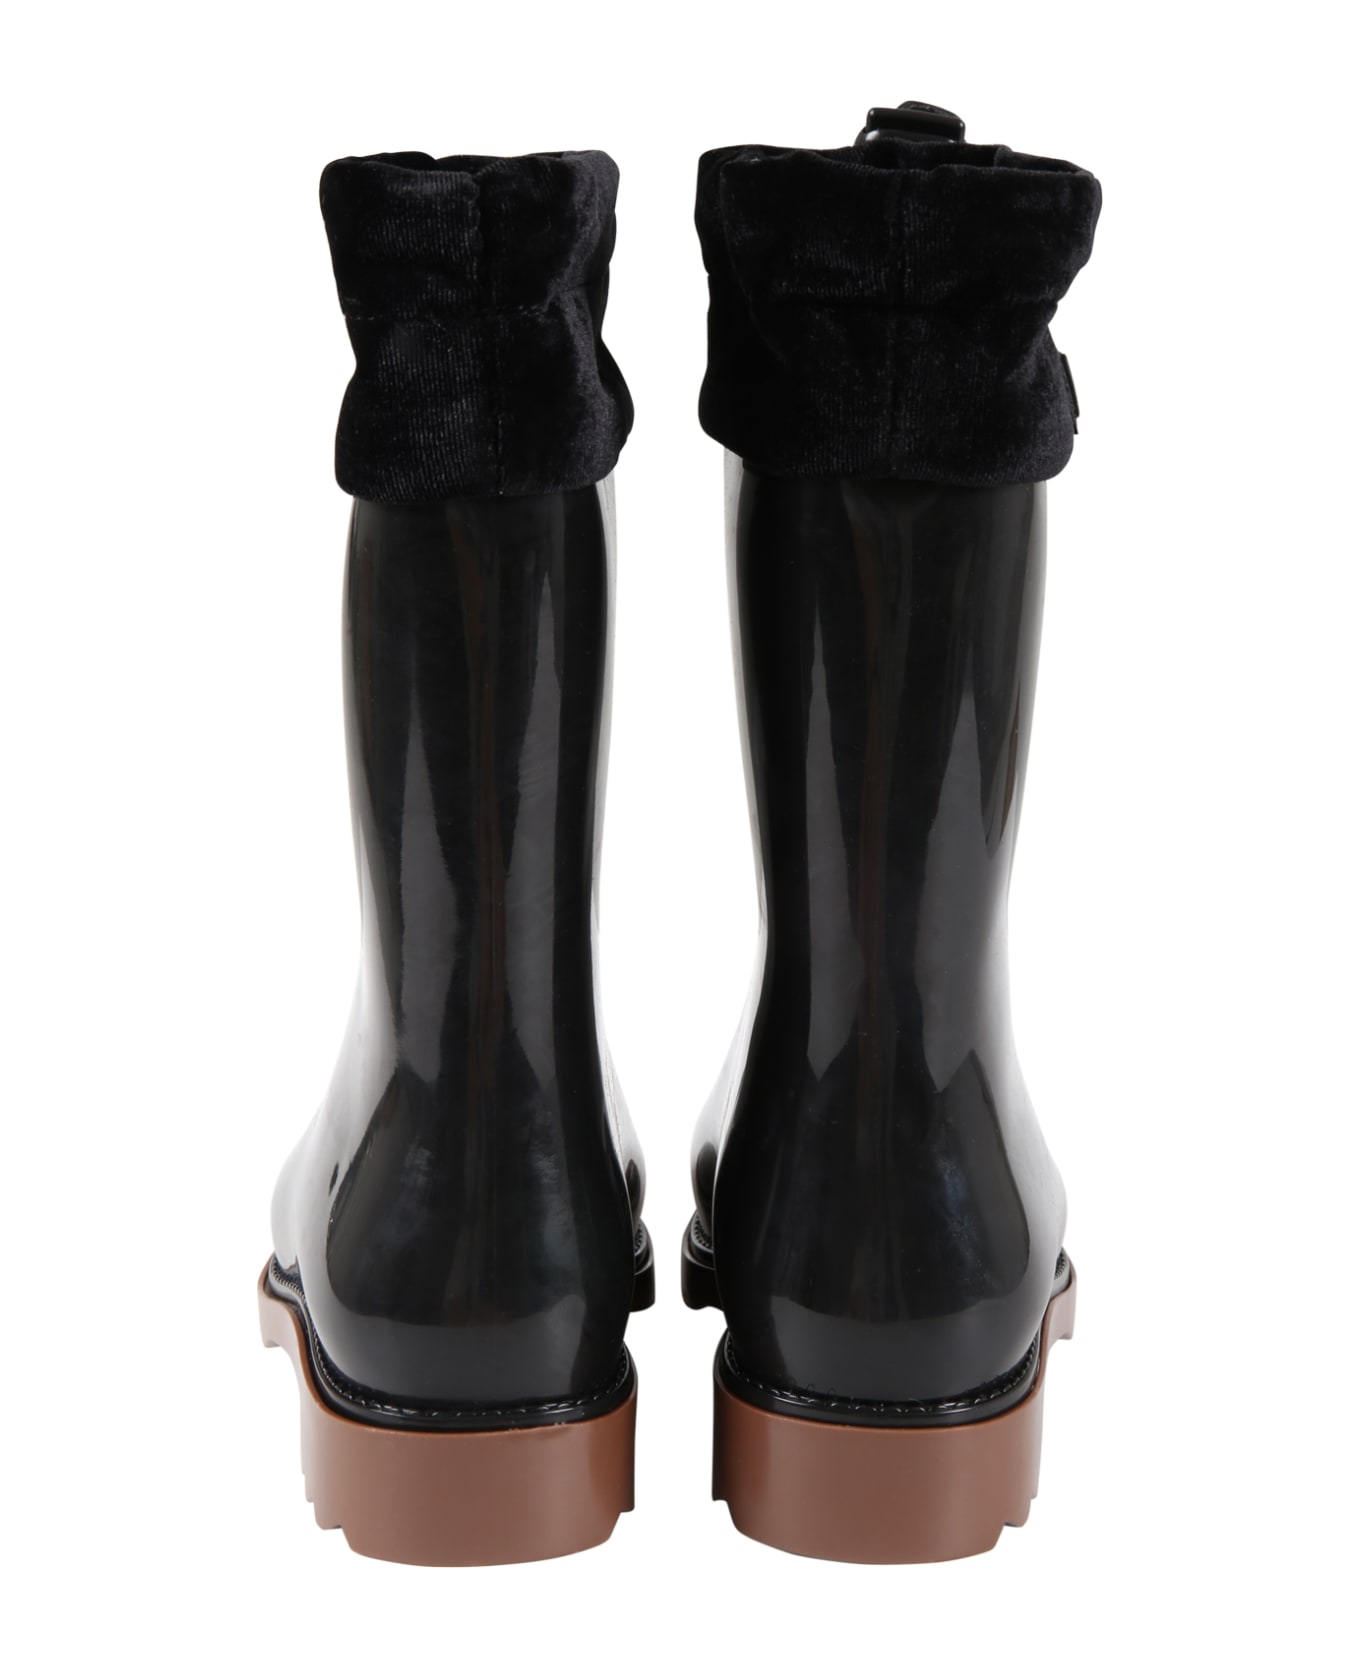 Melissa Black Boots For Girl - Black